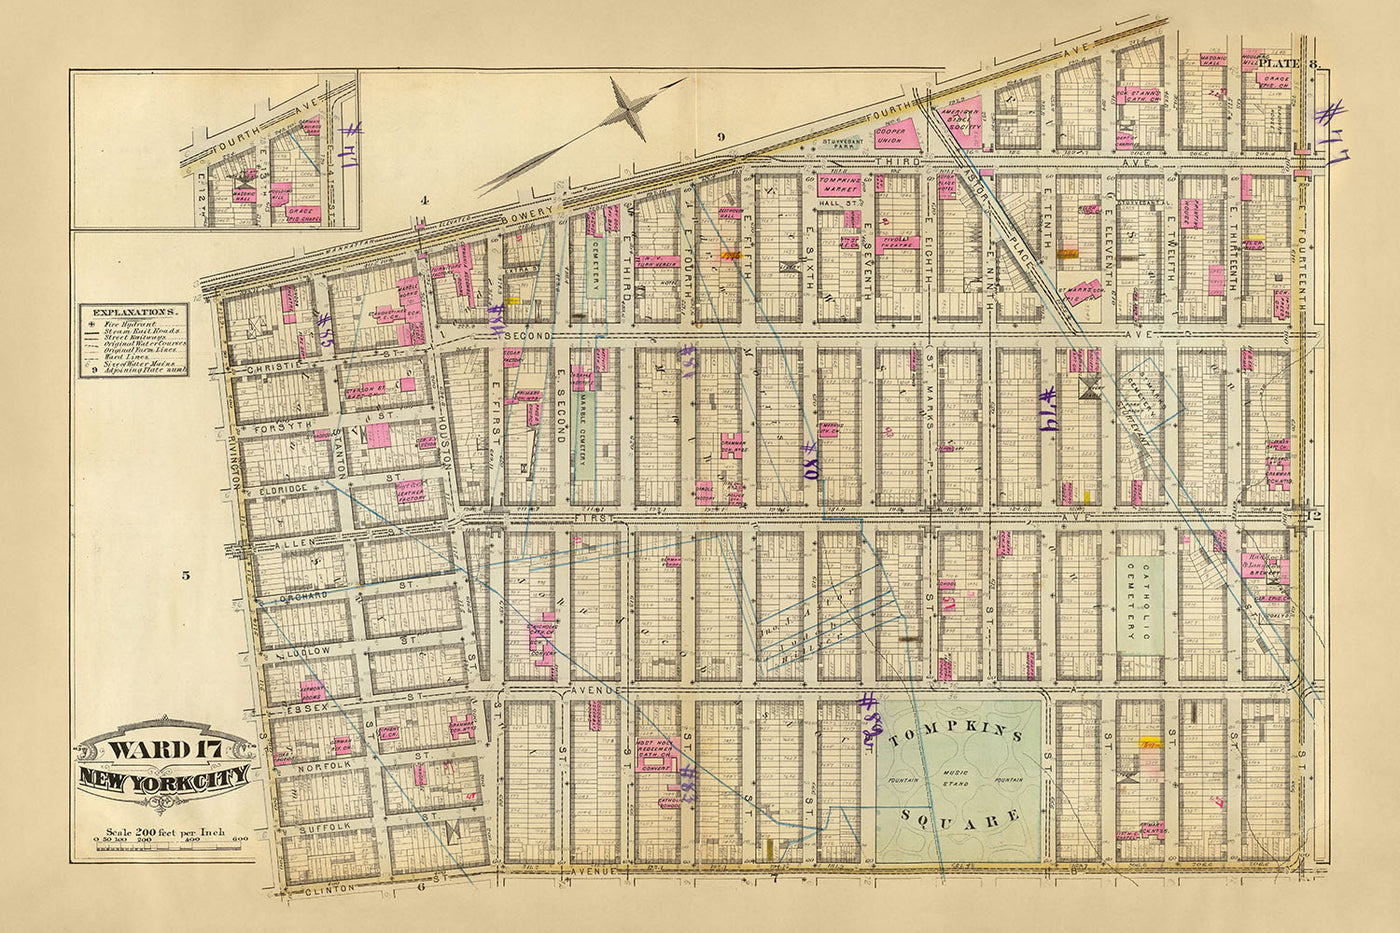 Old Map of East Village, New York City, 1879: Tompkins Square, Stuyvesant Park, Steam Railways.